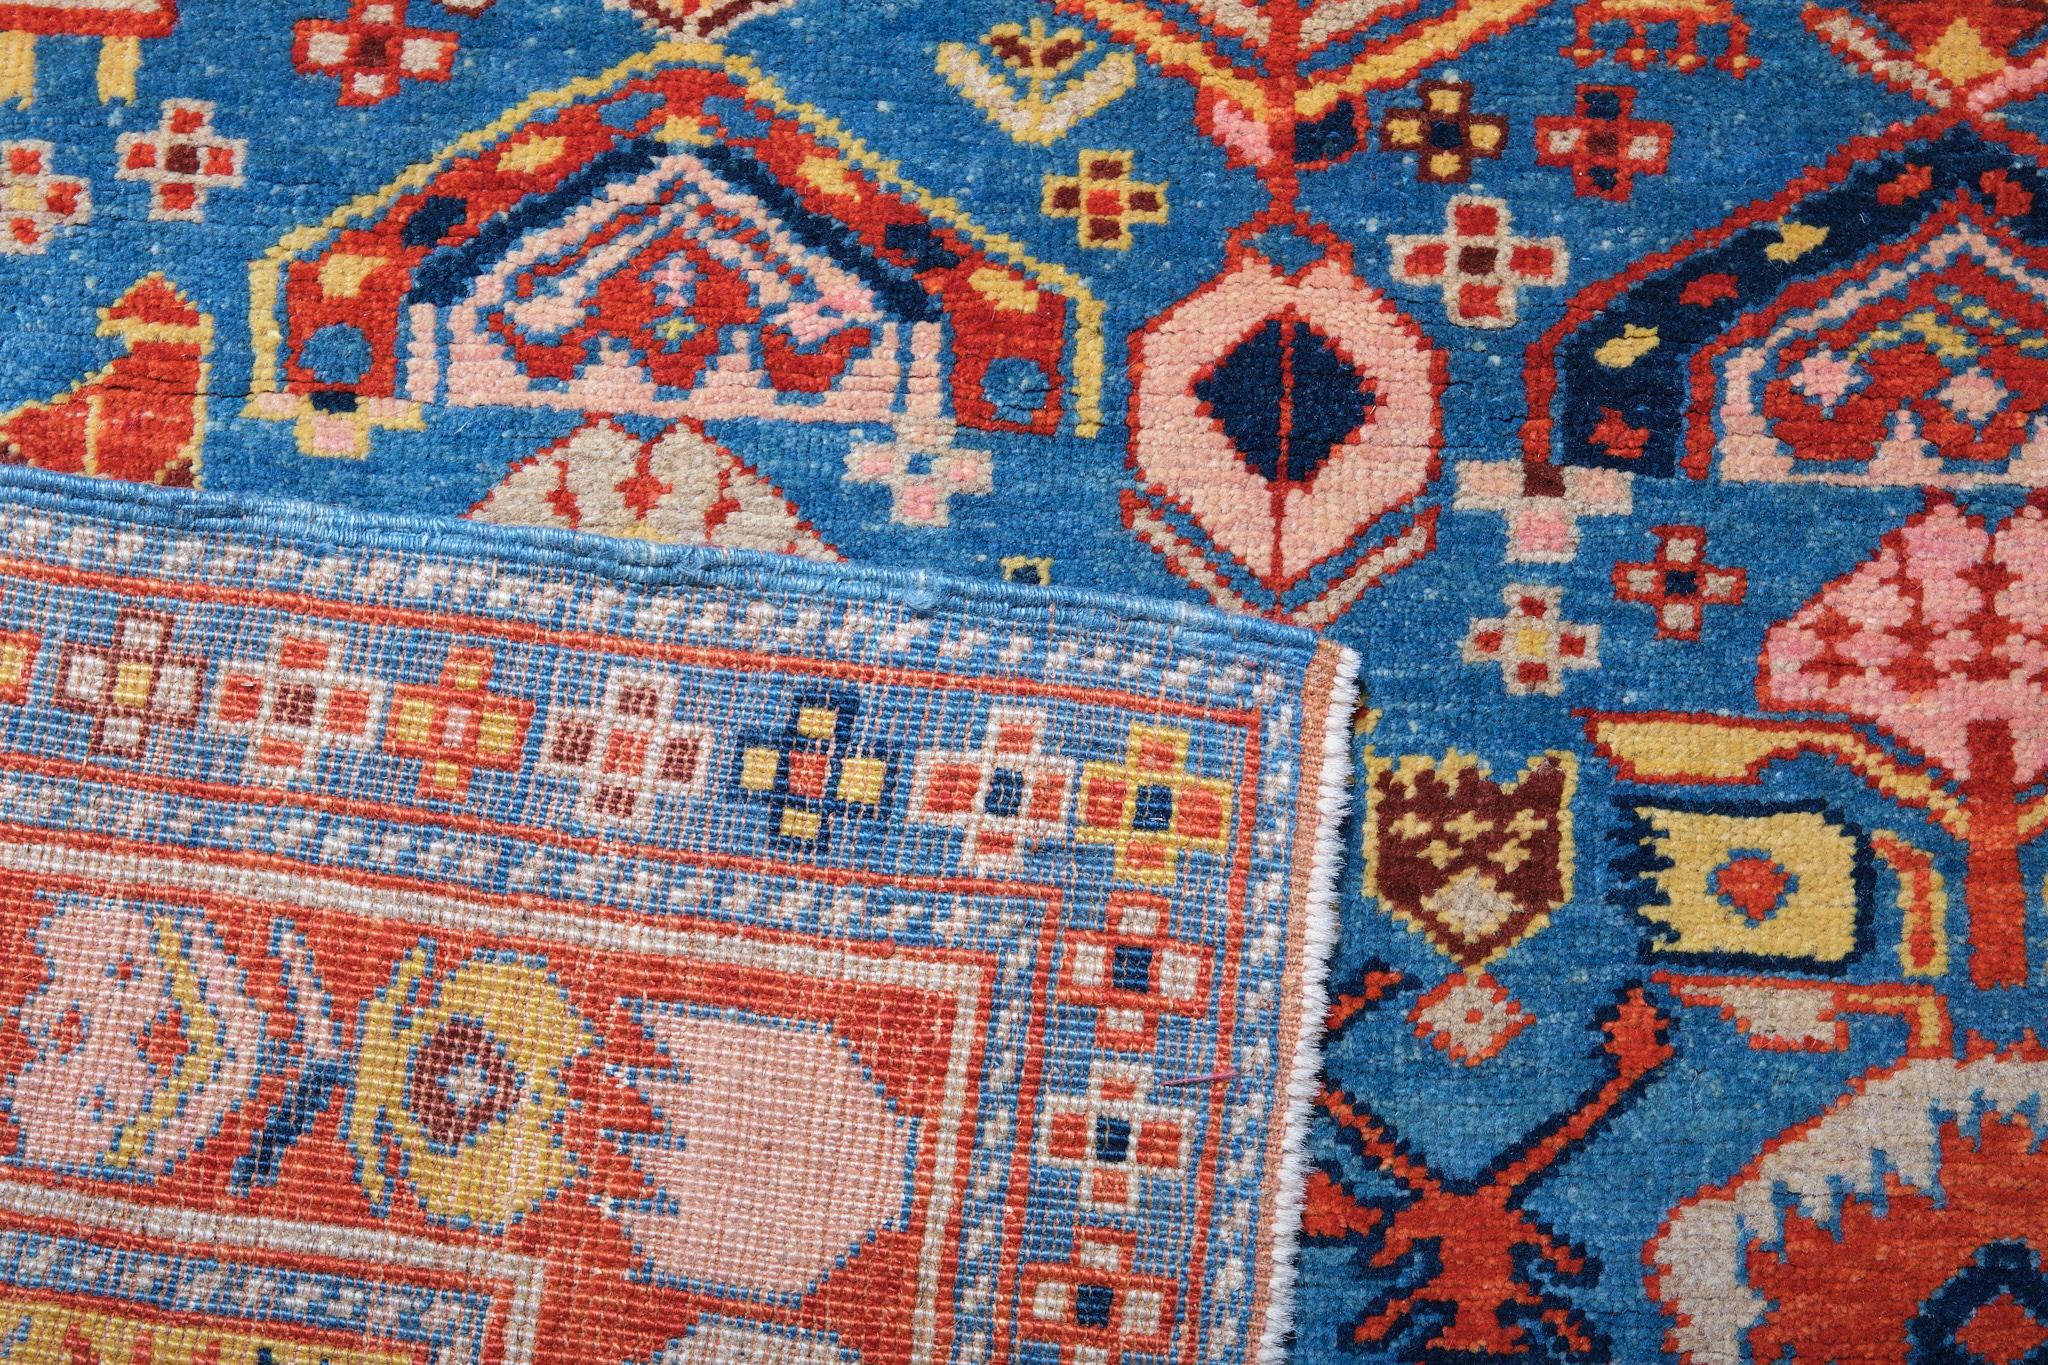 Vegetable Dyed Ararat Rugs Shirvan Rug, 19th C. Antique Caucasian Revival Carpet Natural Dyed